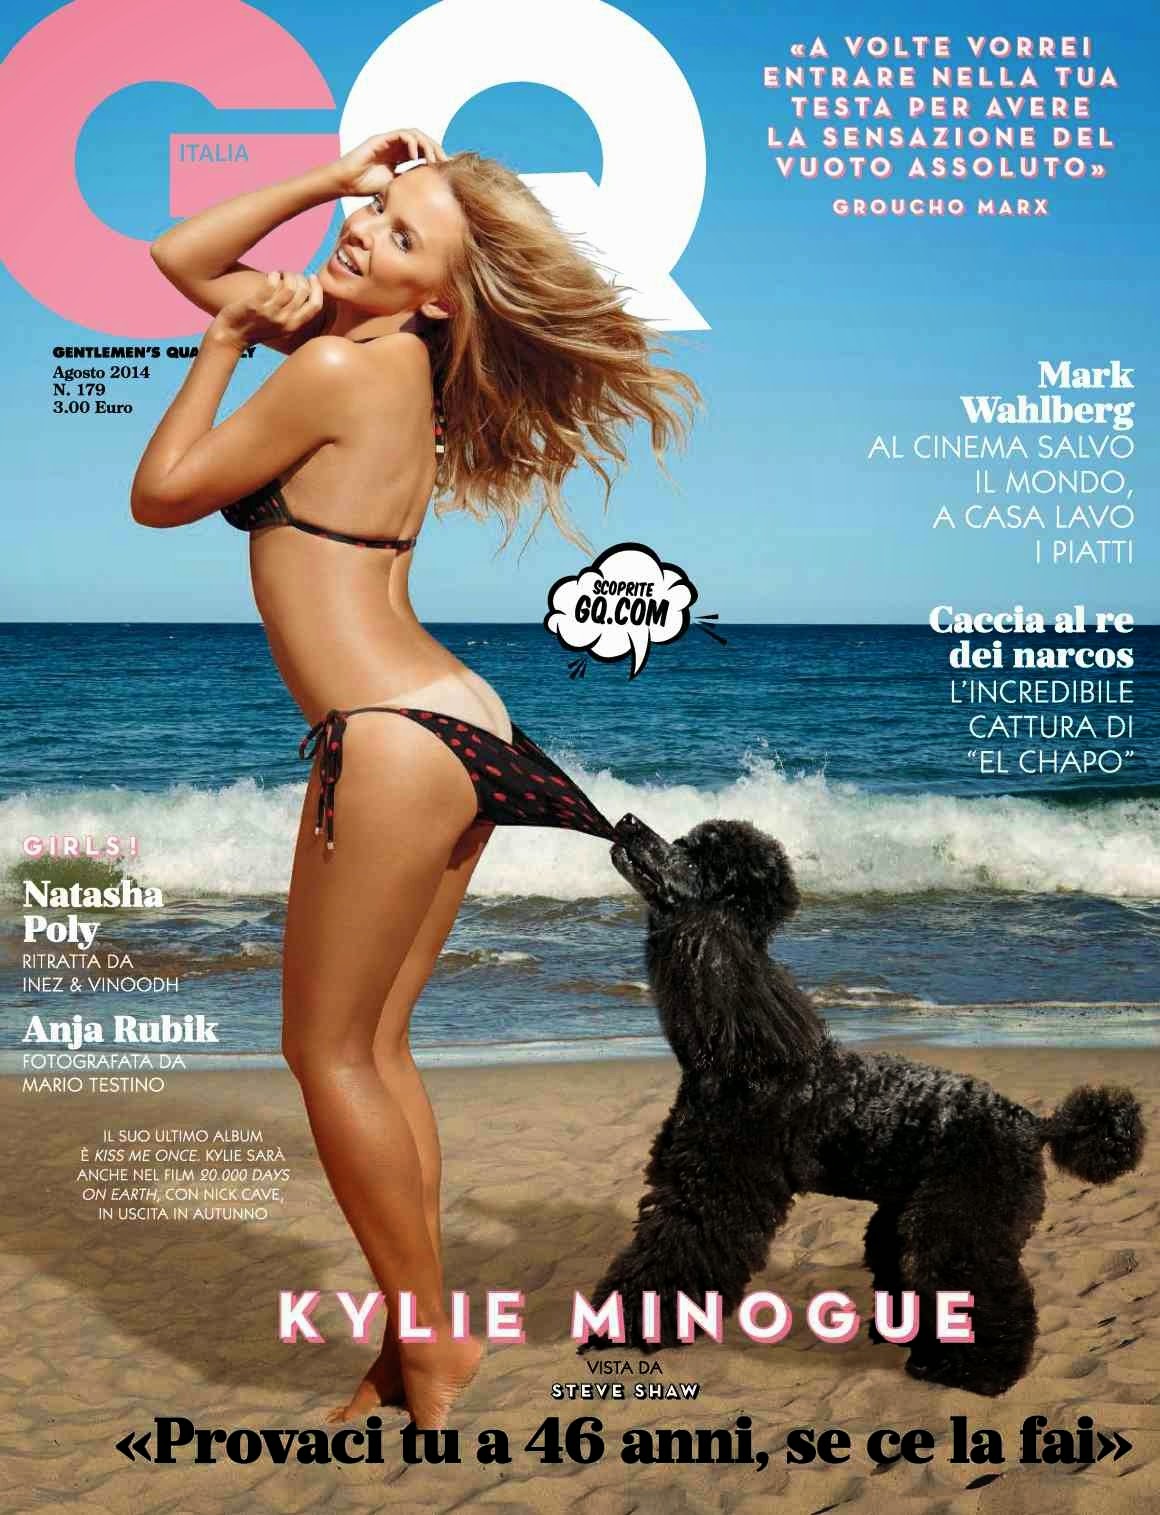 Kylie minogue in a bikini